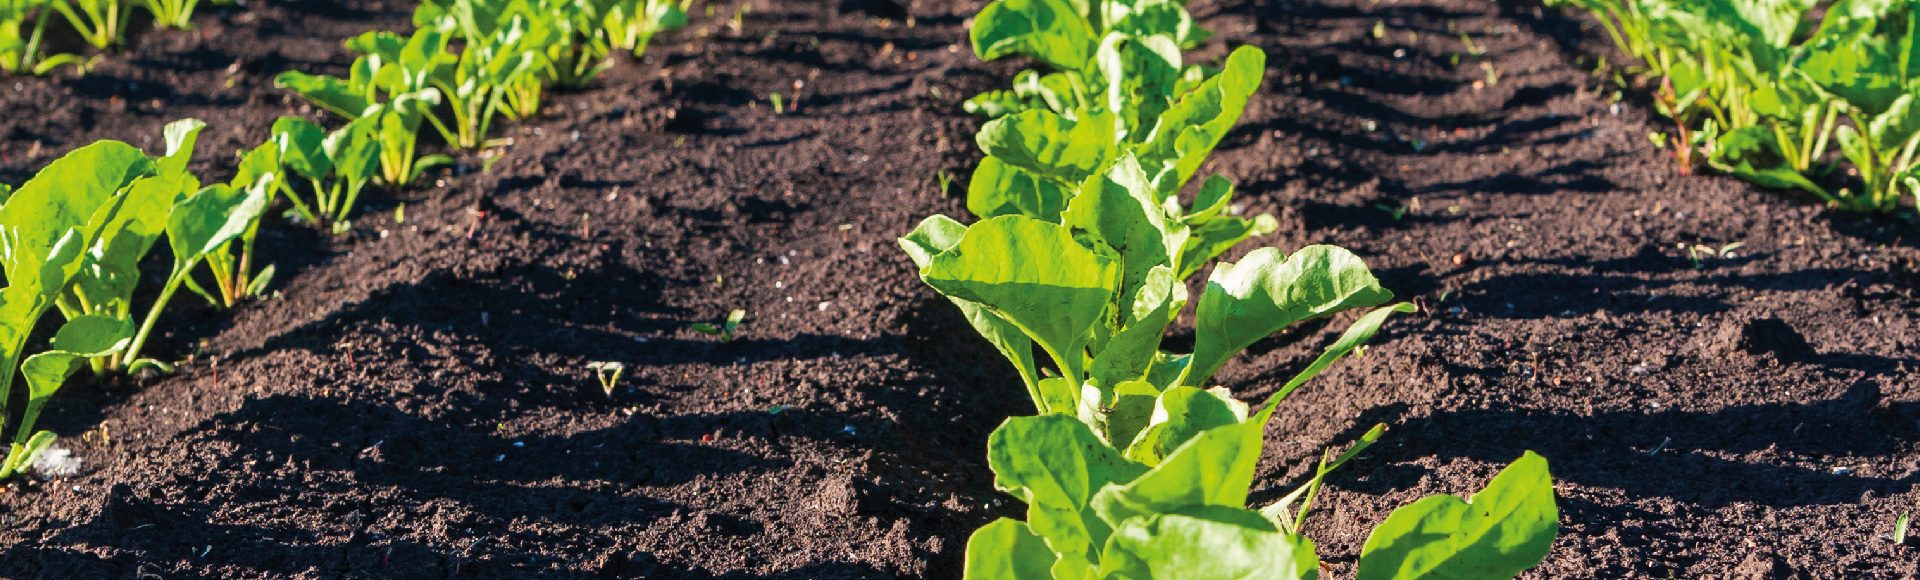 sugar beet fertiliser and crop nutrition